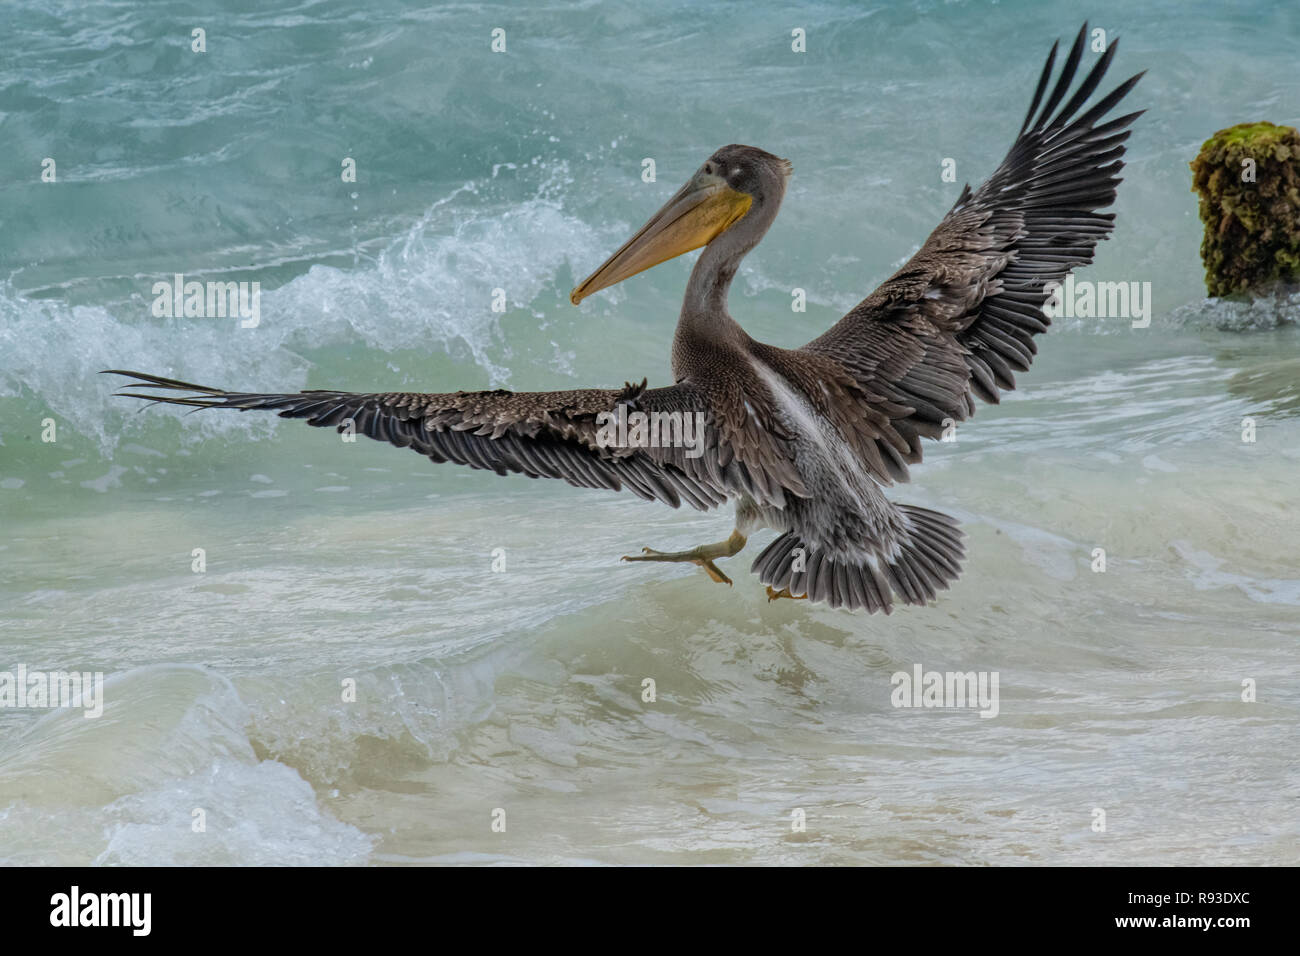 Pelikan - Brauner Pelikan, Pelecanus occidentalis / pelecanidae Wasser Vogel w/große Schnabel - in Aruba / Karibik Insel - Coastal Sea Bird Stockfoto